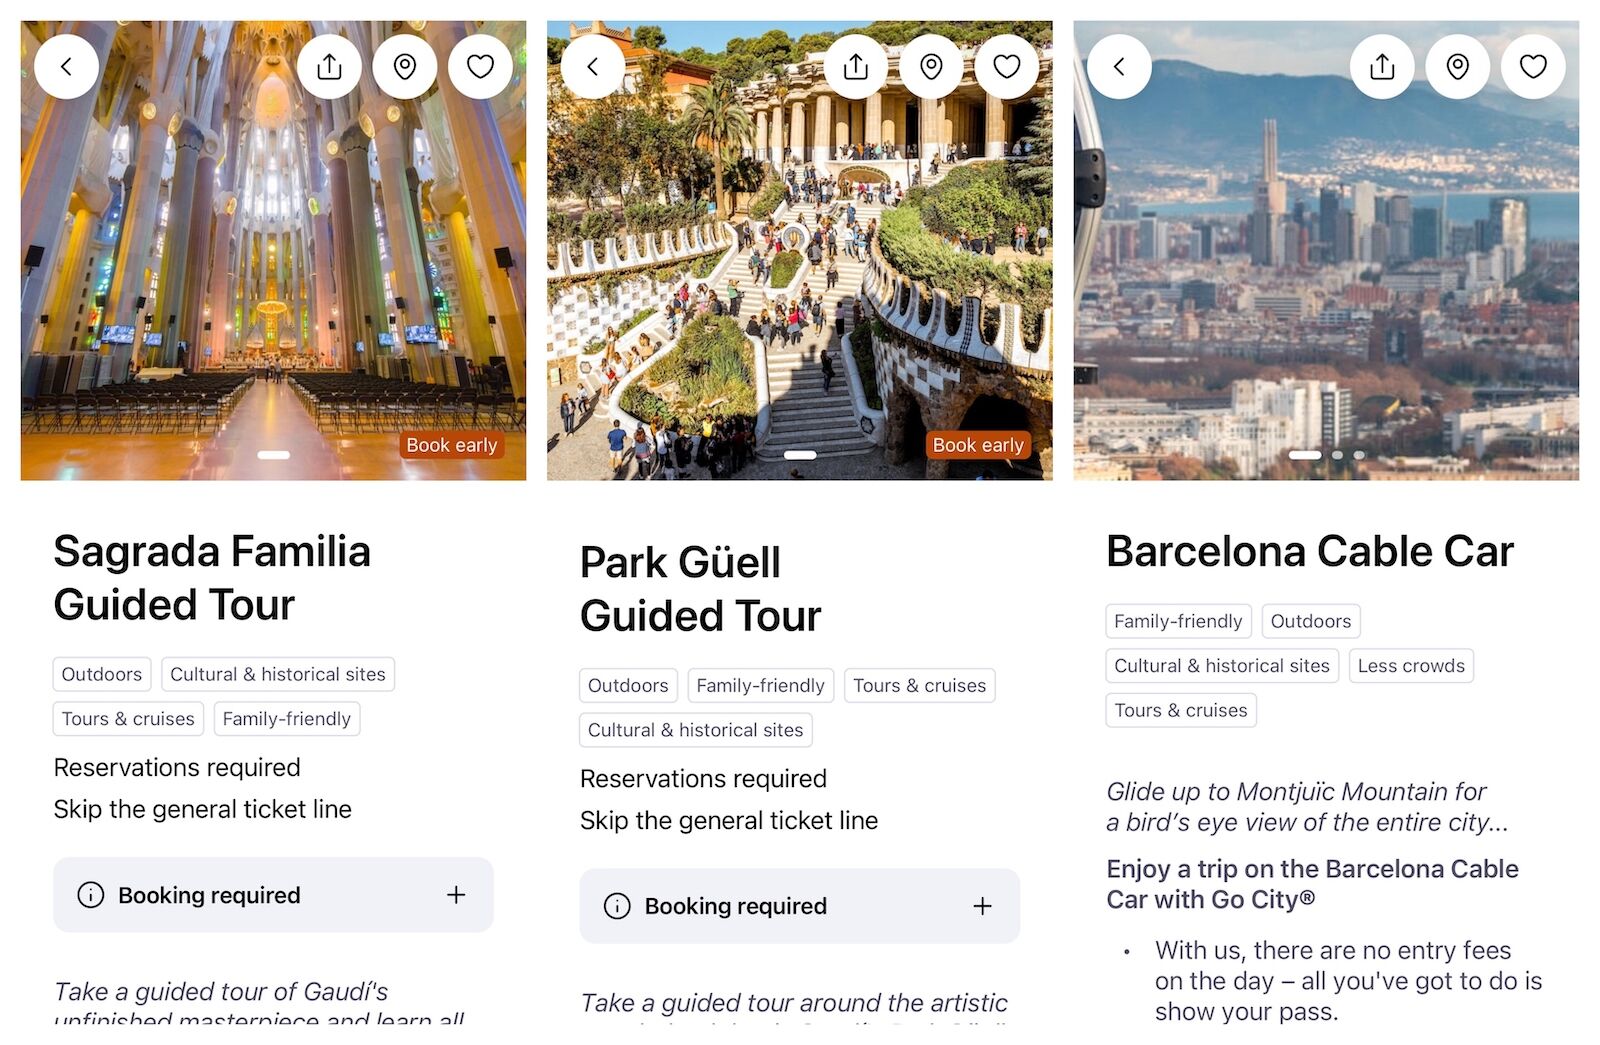 Three-attraction Go City pass in Barcelona